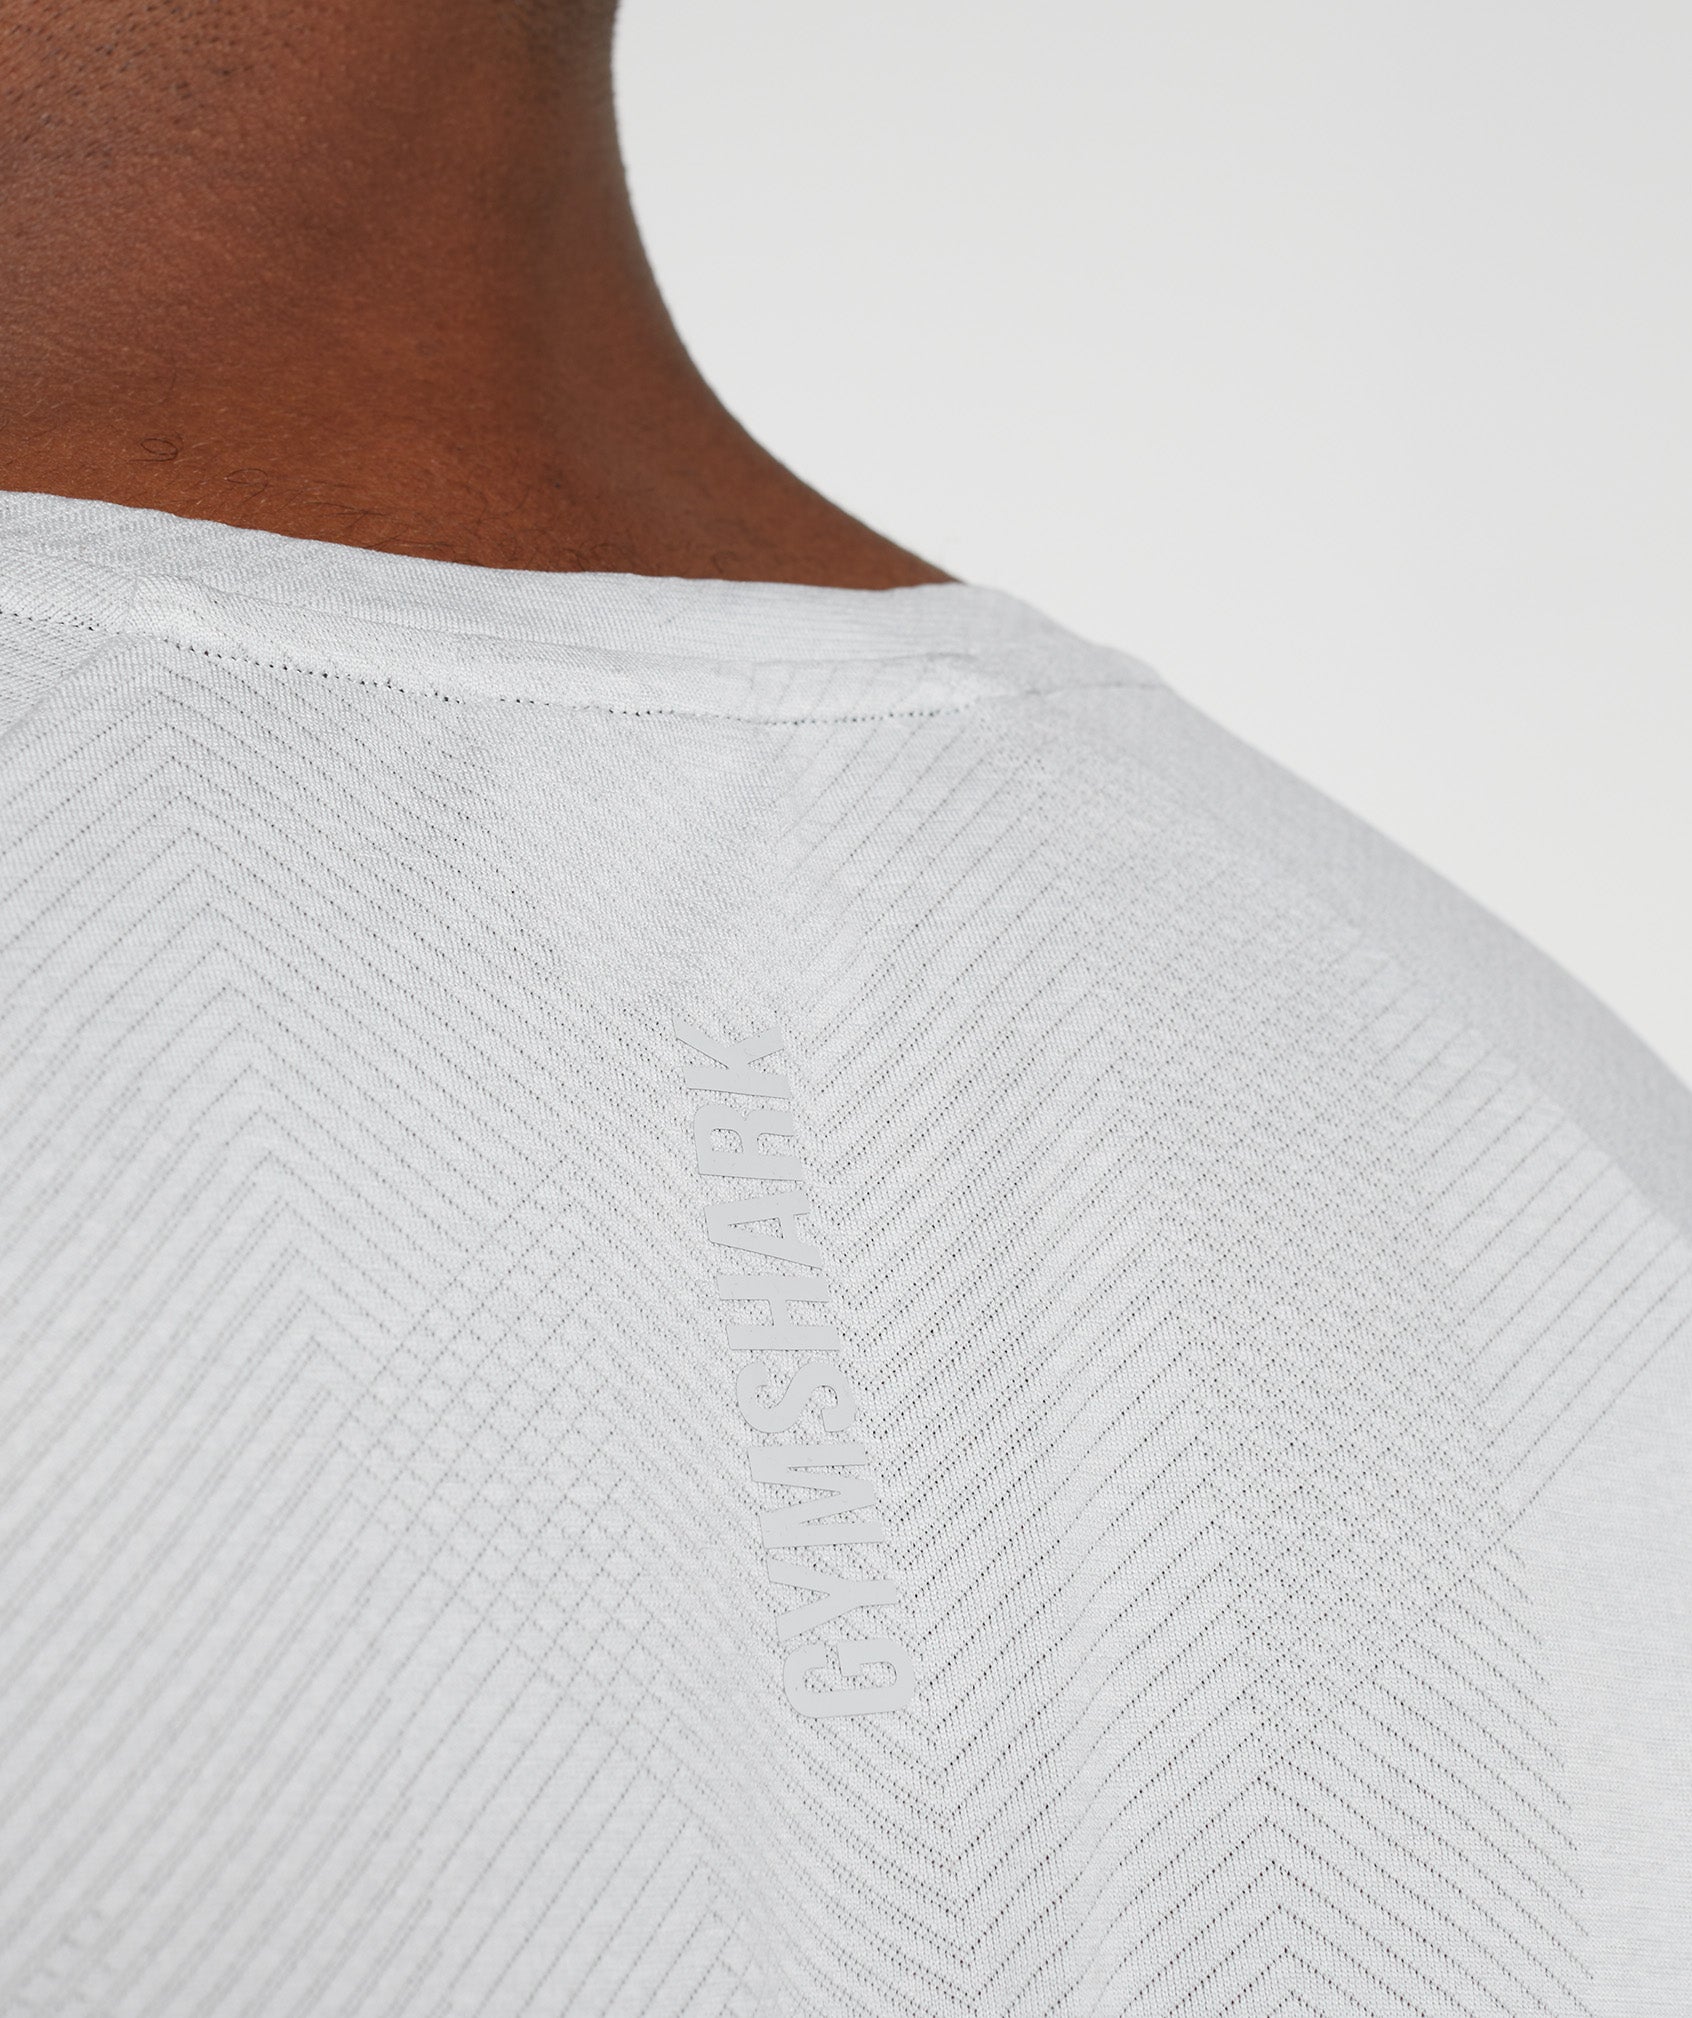 Apex T-Shirt in Light Grey/White